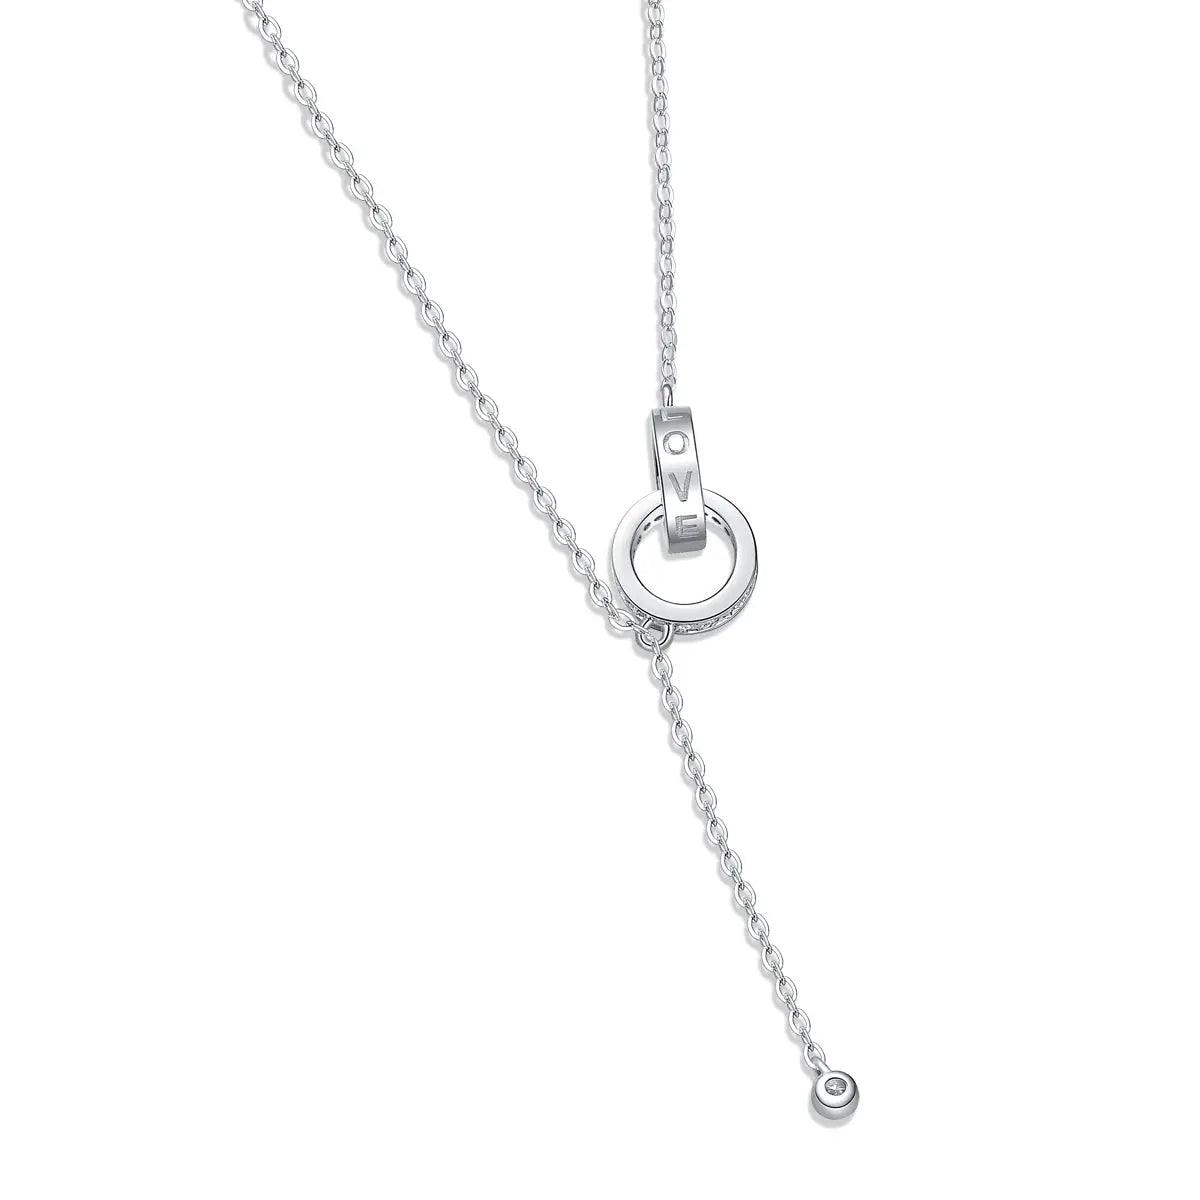 FairyLocus “Interlocking” Moissanite Necklace Sterling Silver 18K White Gold Plated D Color VVS1 Clarity Brilliant Necklace FLZZNLMS17 Fairylocus